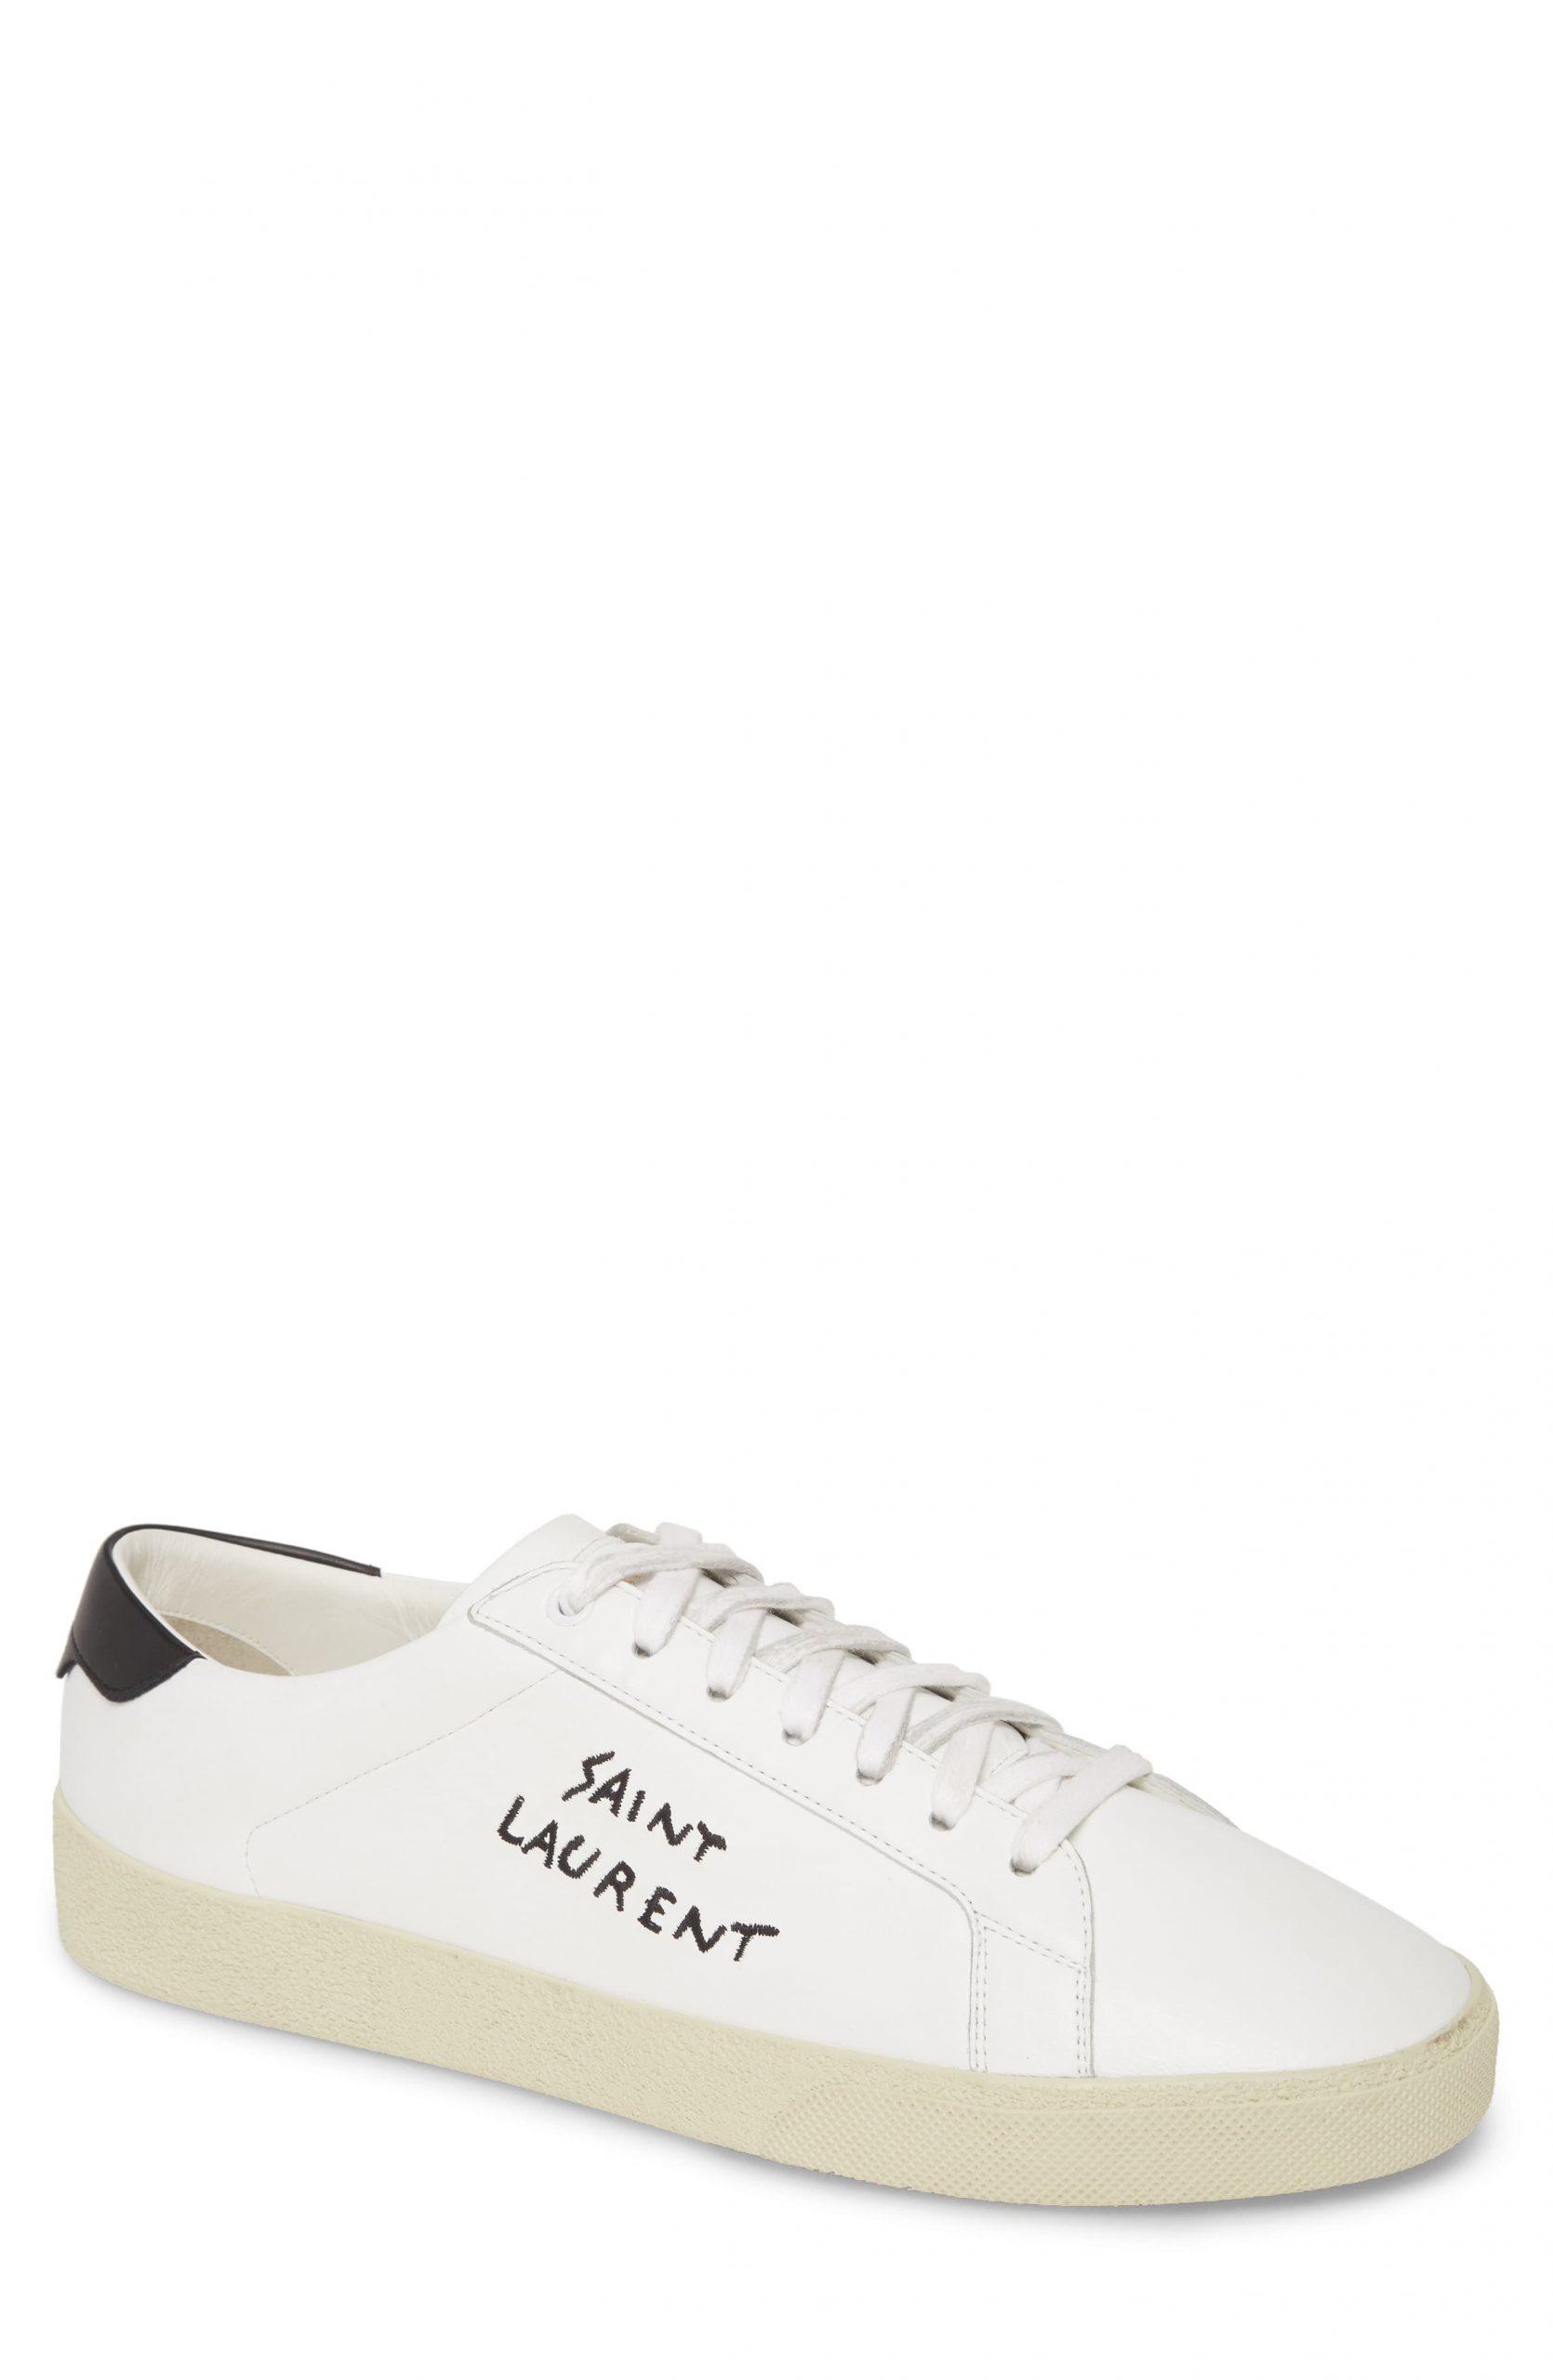 saint laurent men's white sneakers